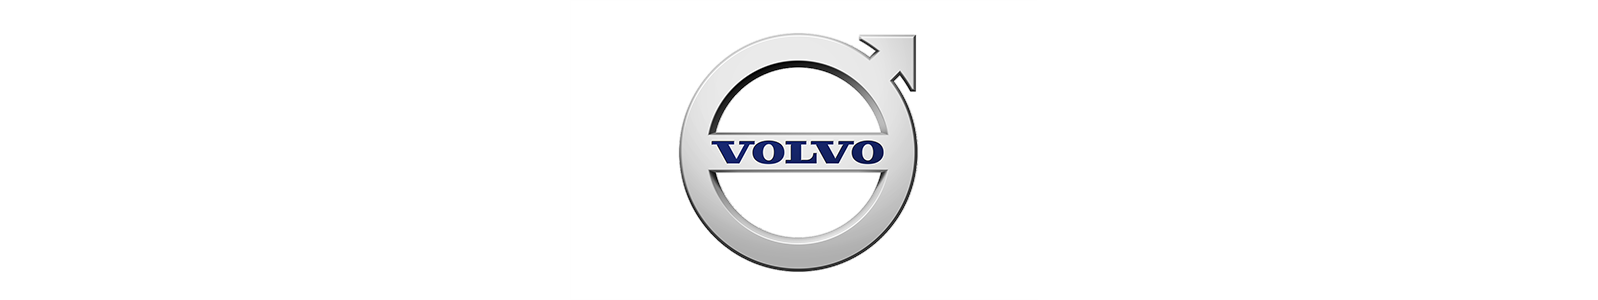 Volvo-300a